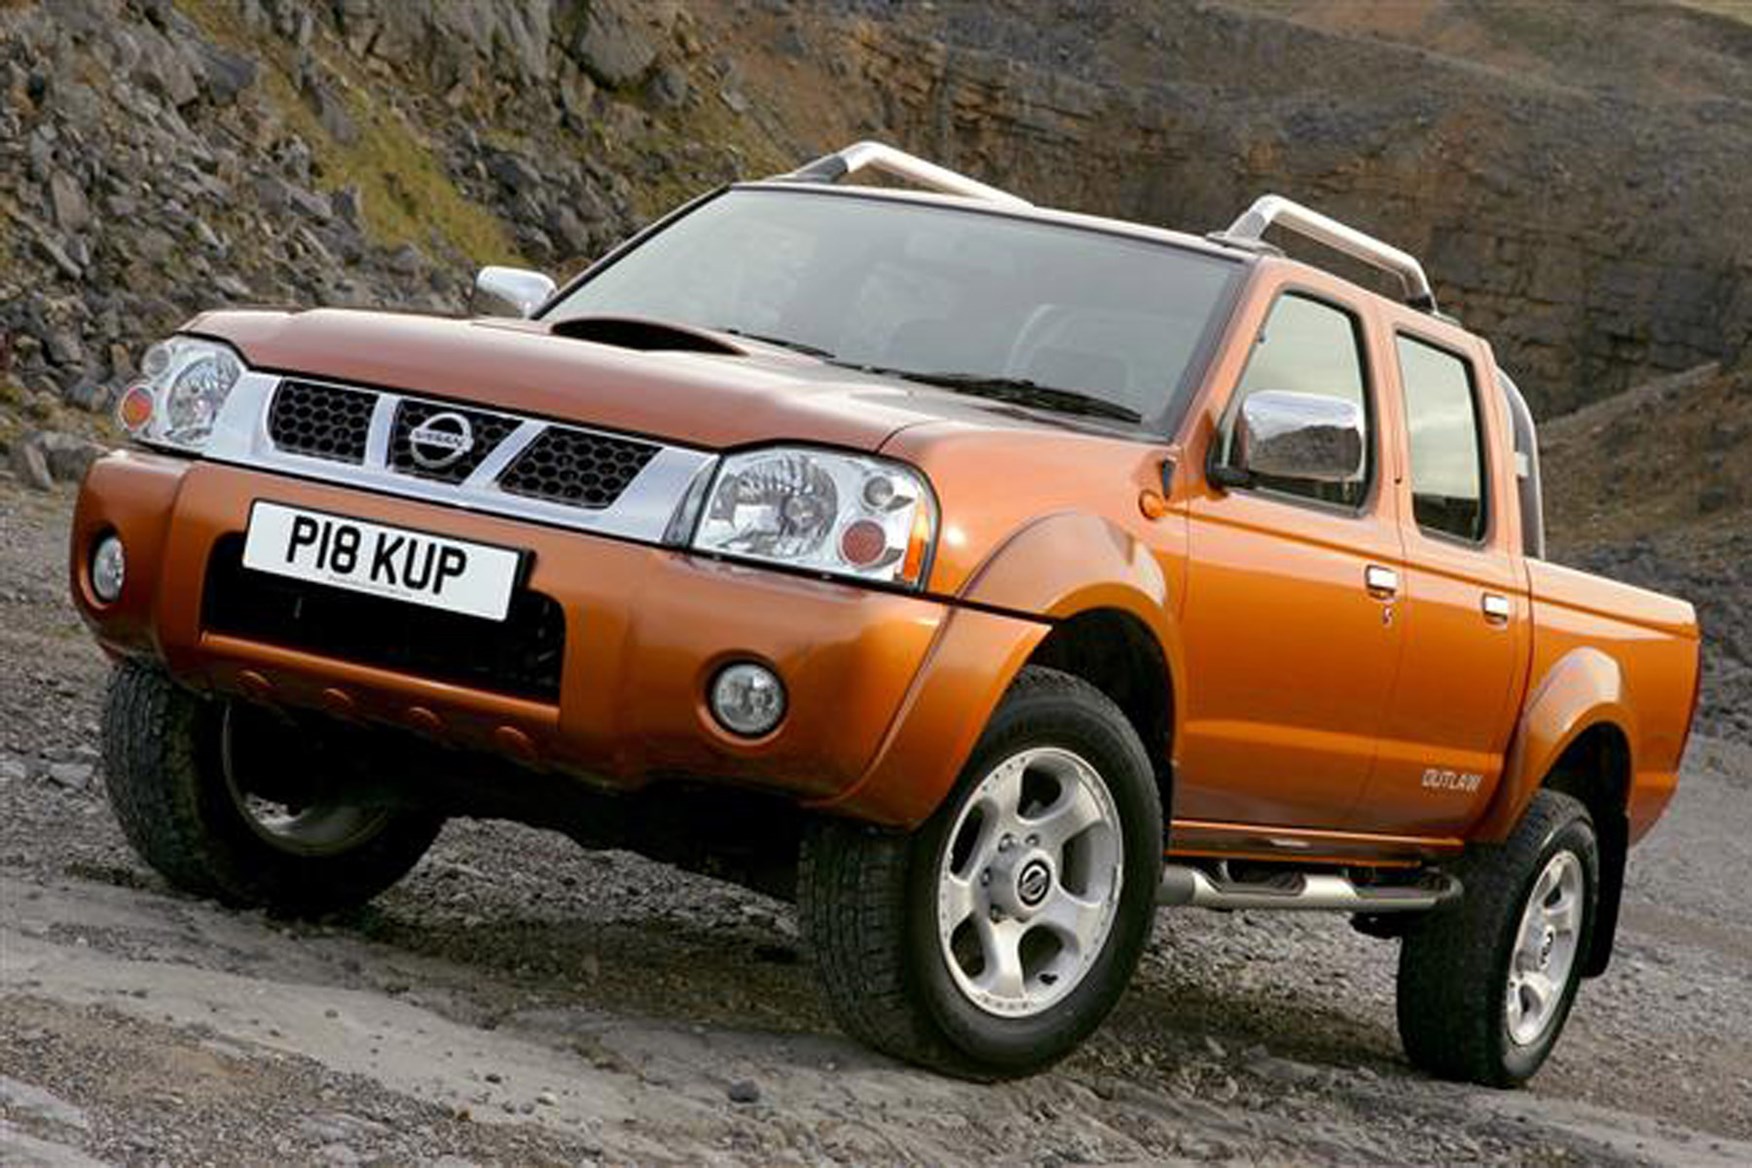 Nissan Navara 2001-2005 review on Parkers Vans - exterior 